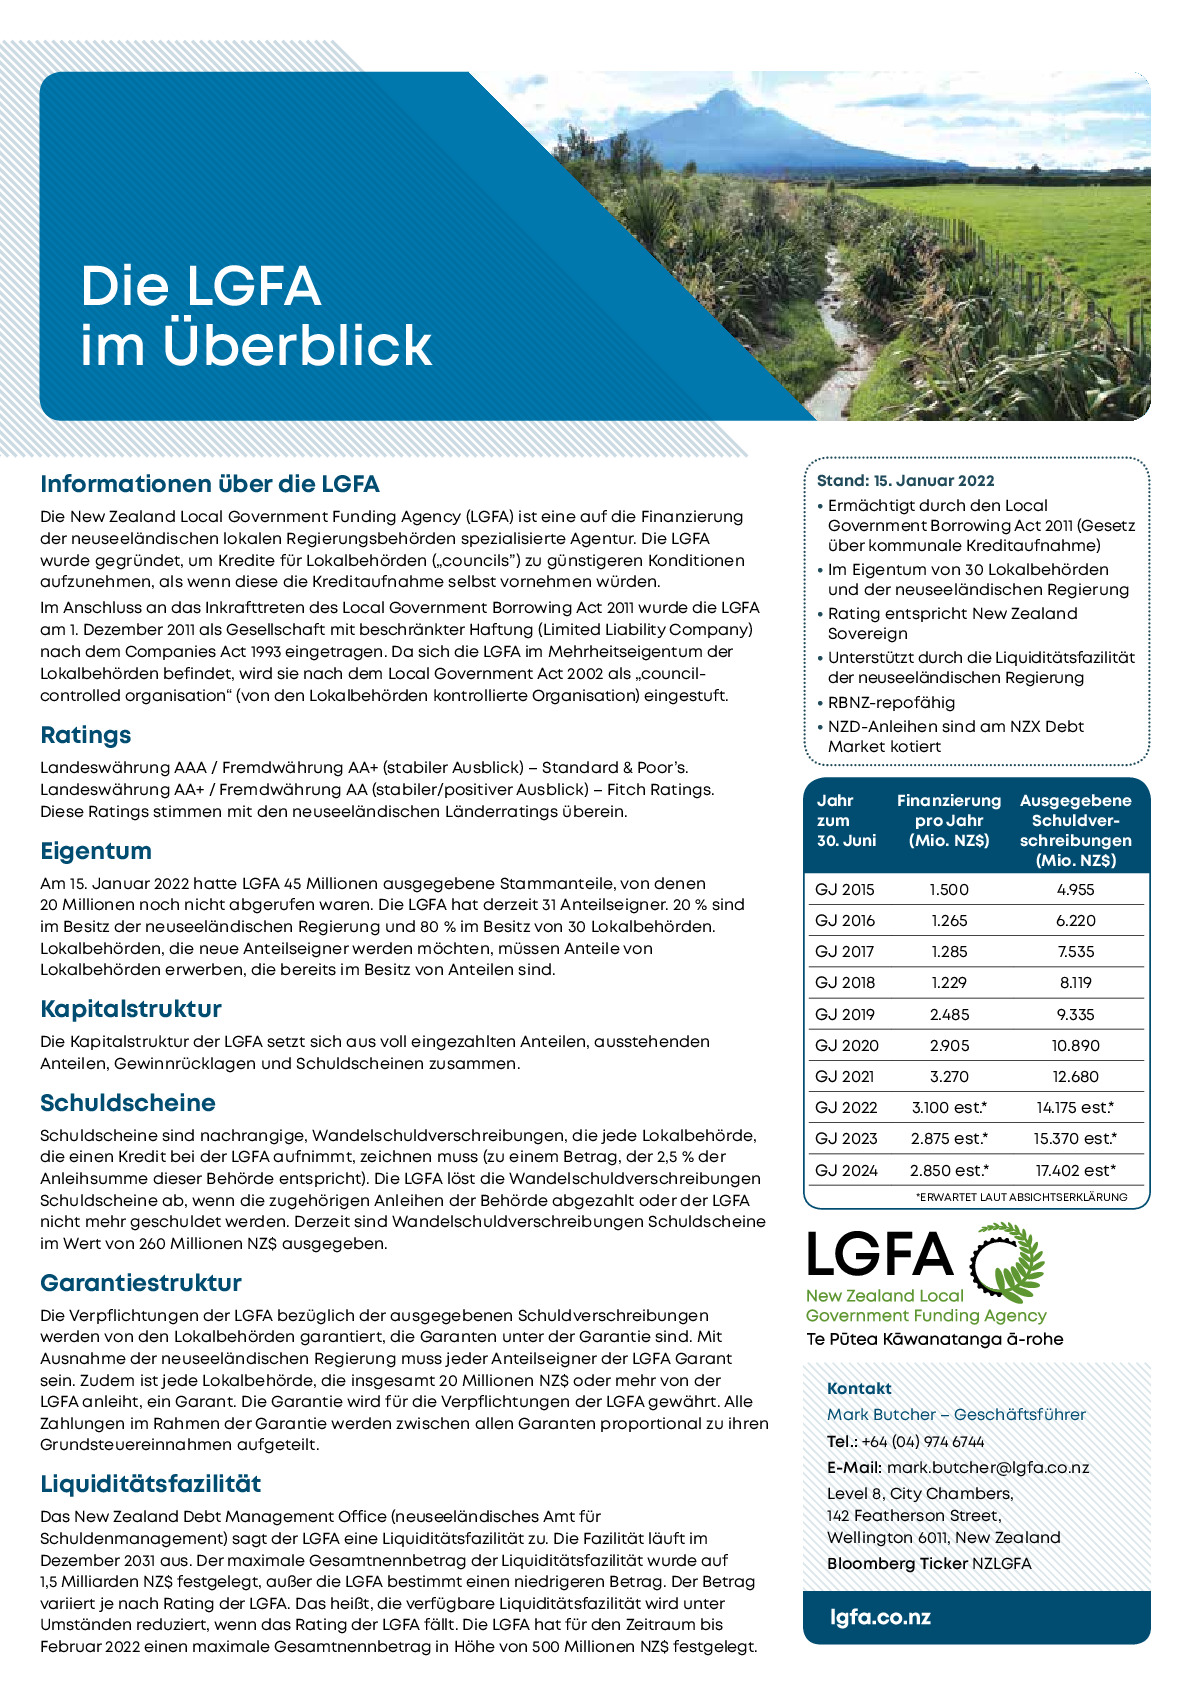 LGFA_Overview_Jan22 - German